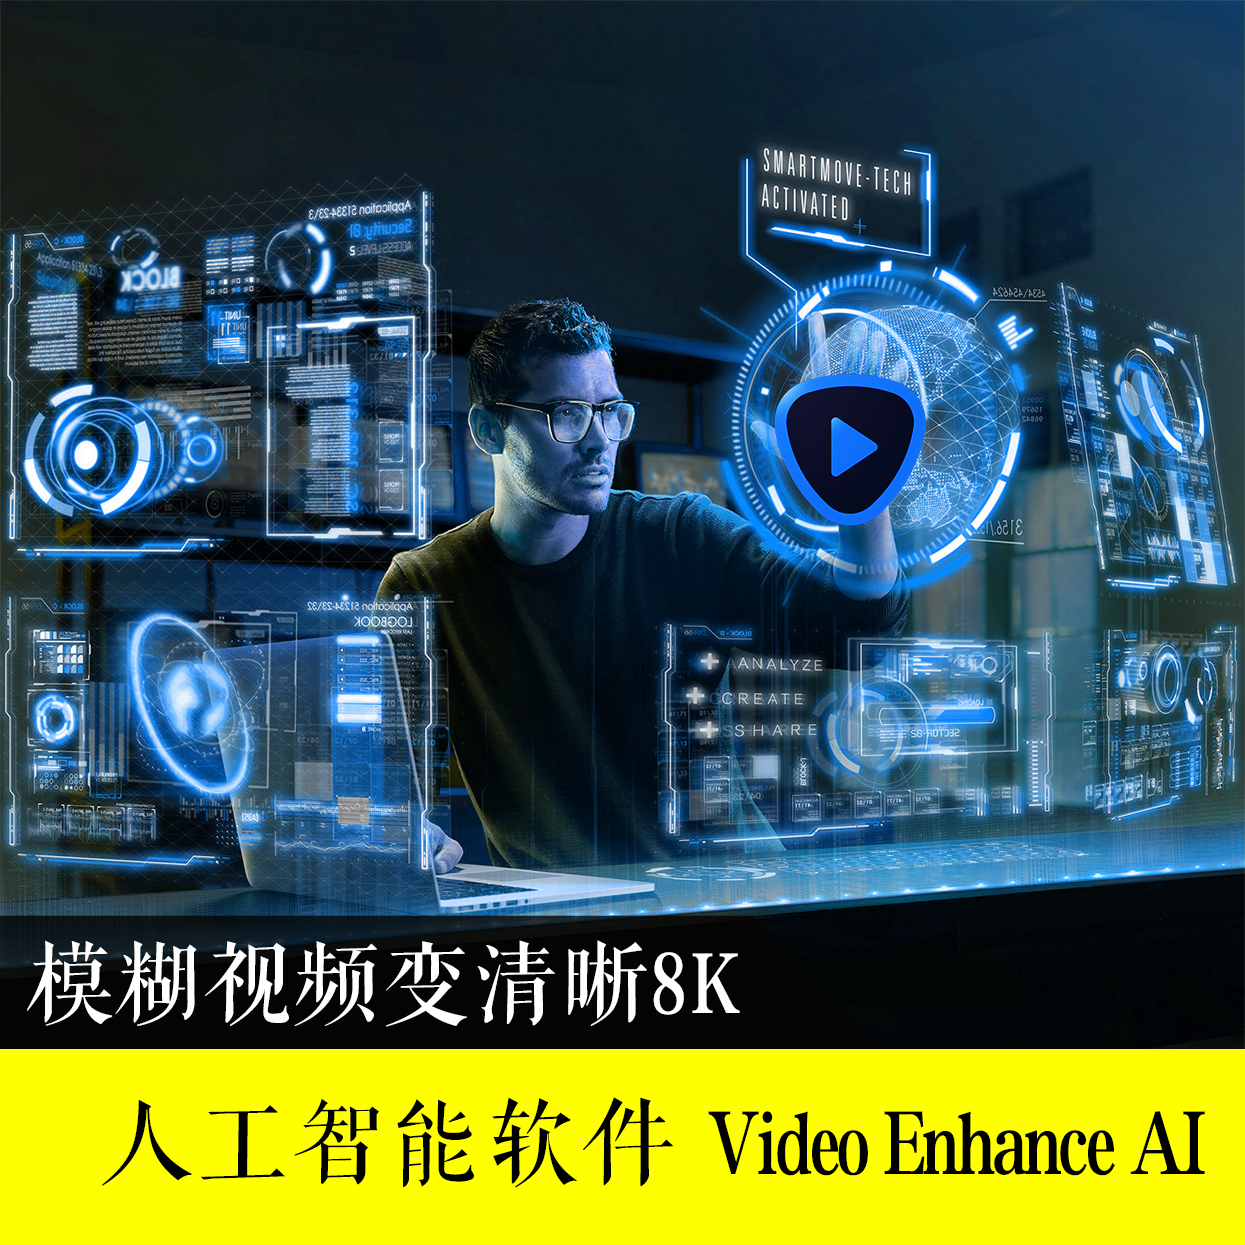 【A193】人工智能视频无损放大软件Topaz Video Enhance AI 1.8.2汉化版,视频放大至8K分辨率